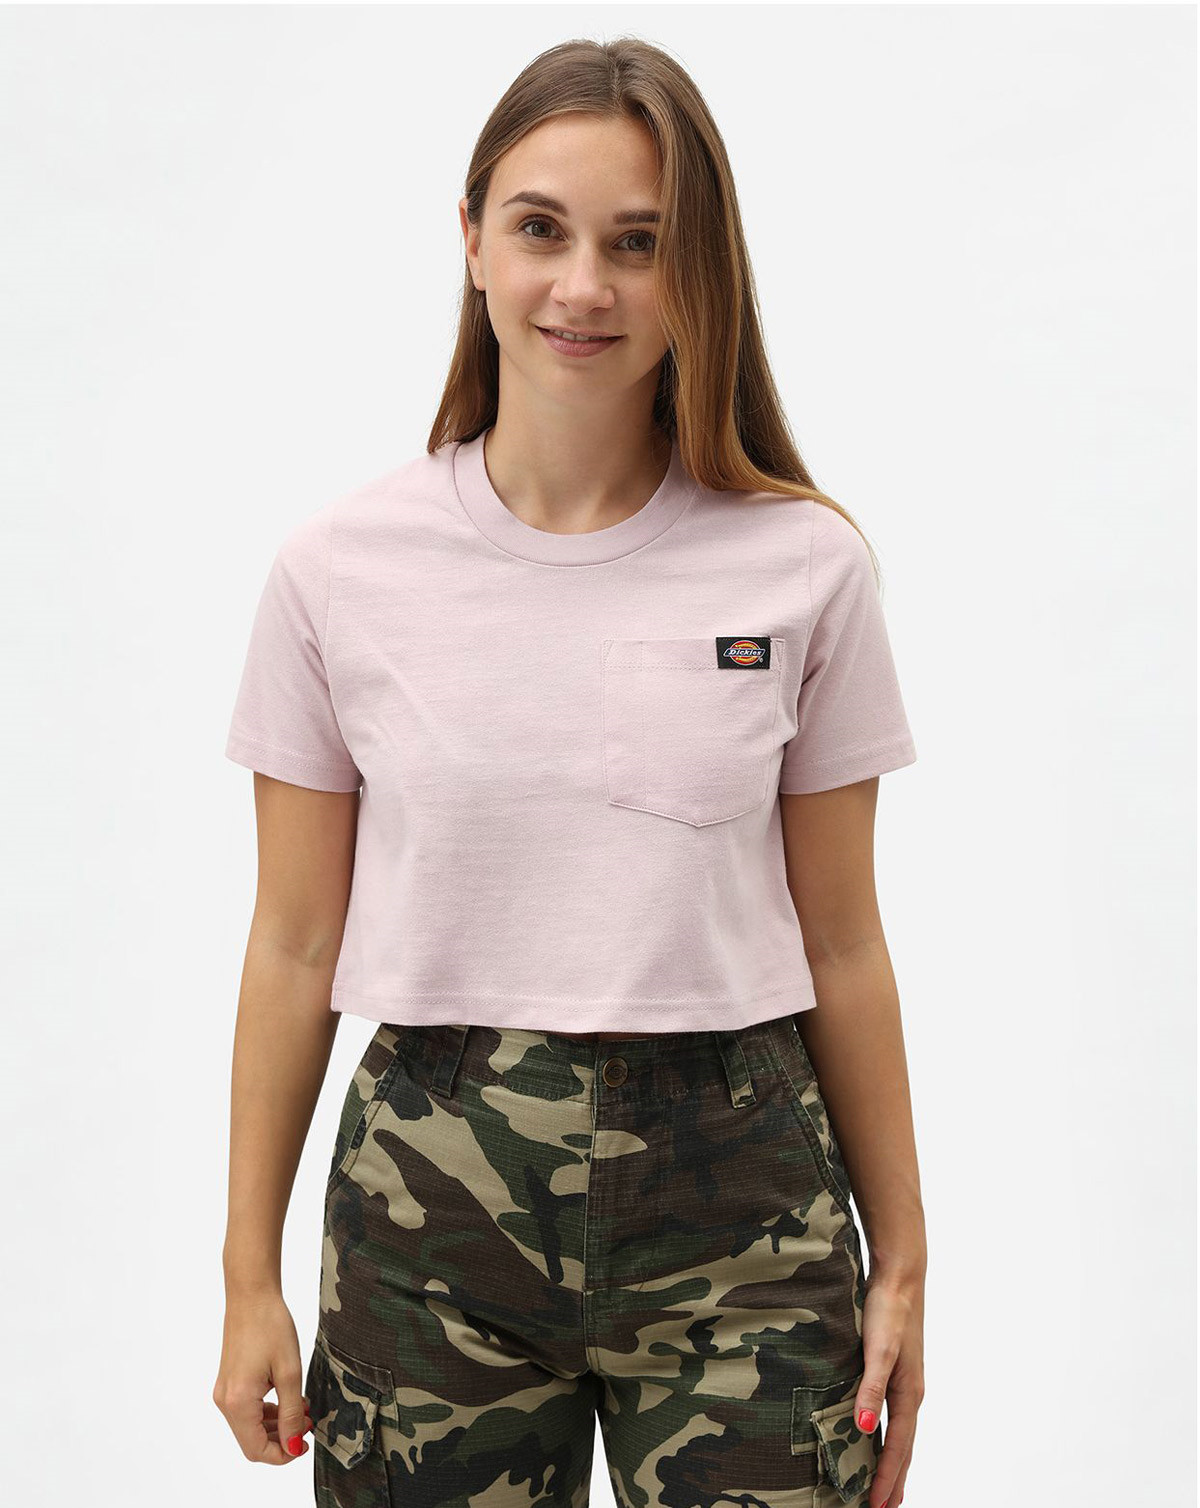 #3 - Dickies Ellenwood Women T-shirt (Pink, XS)